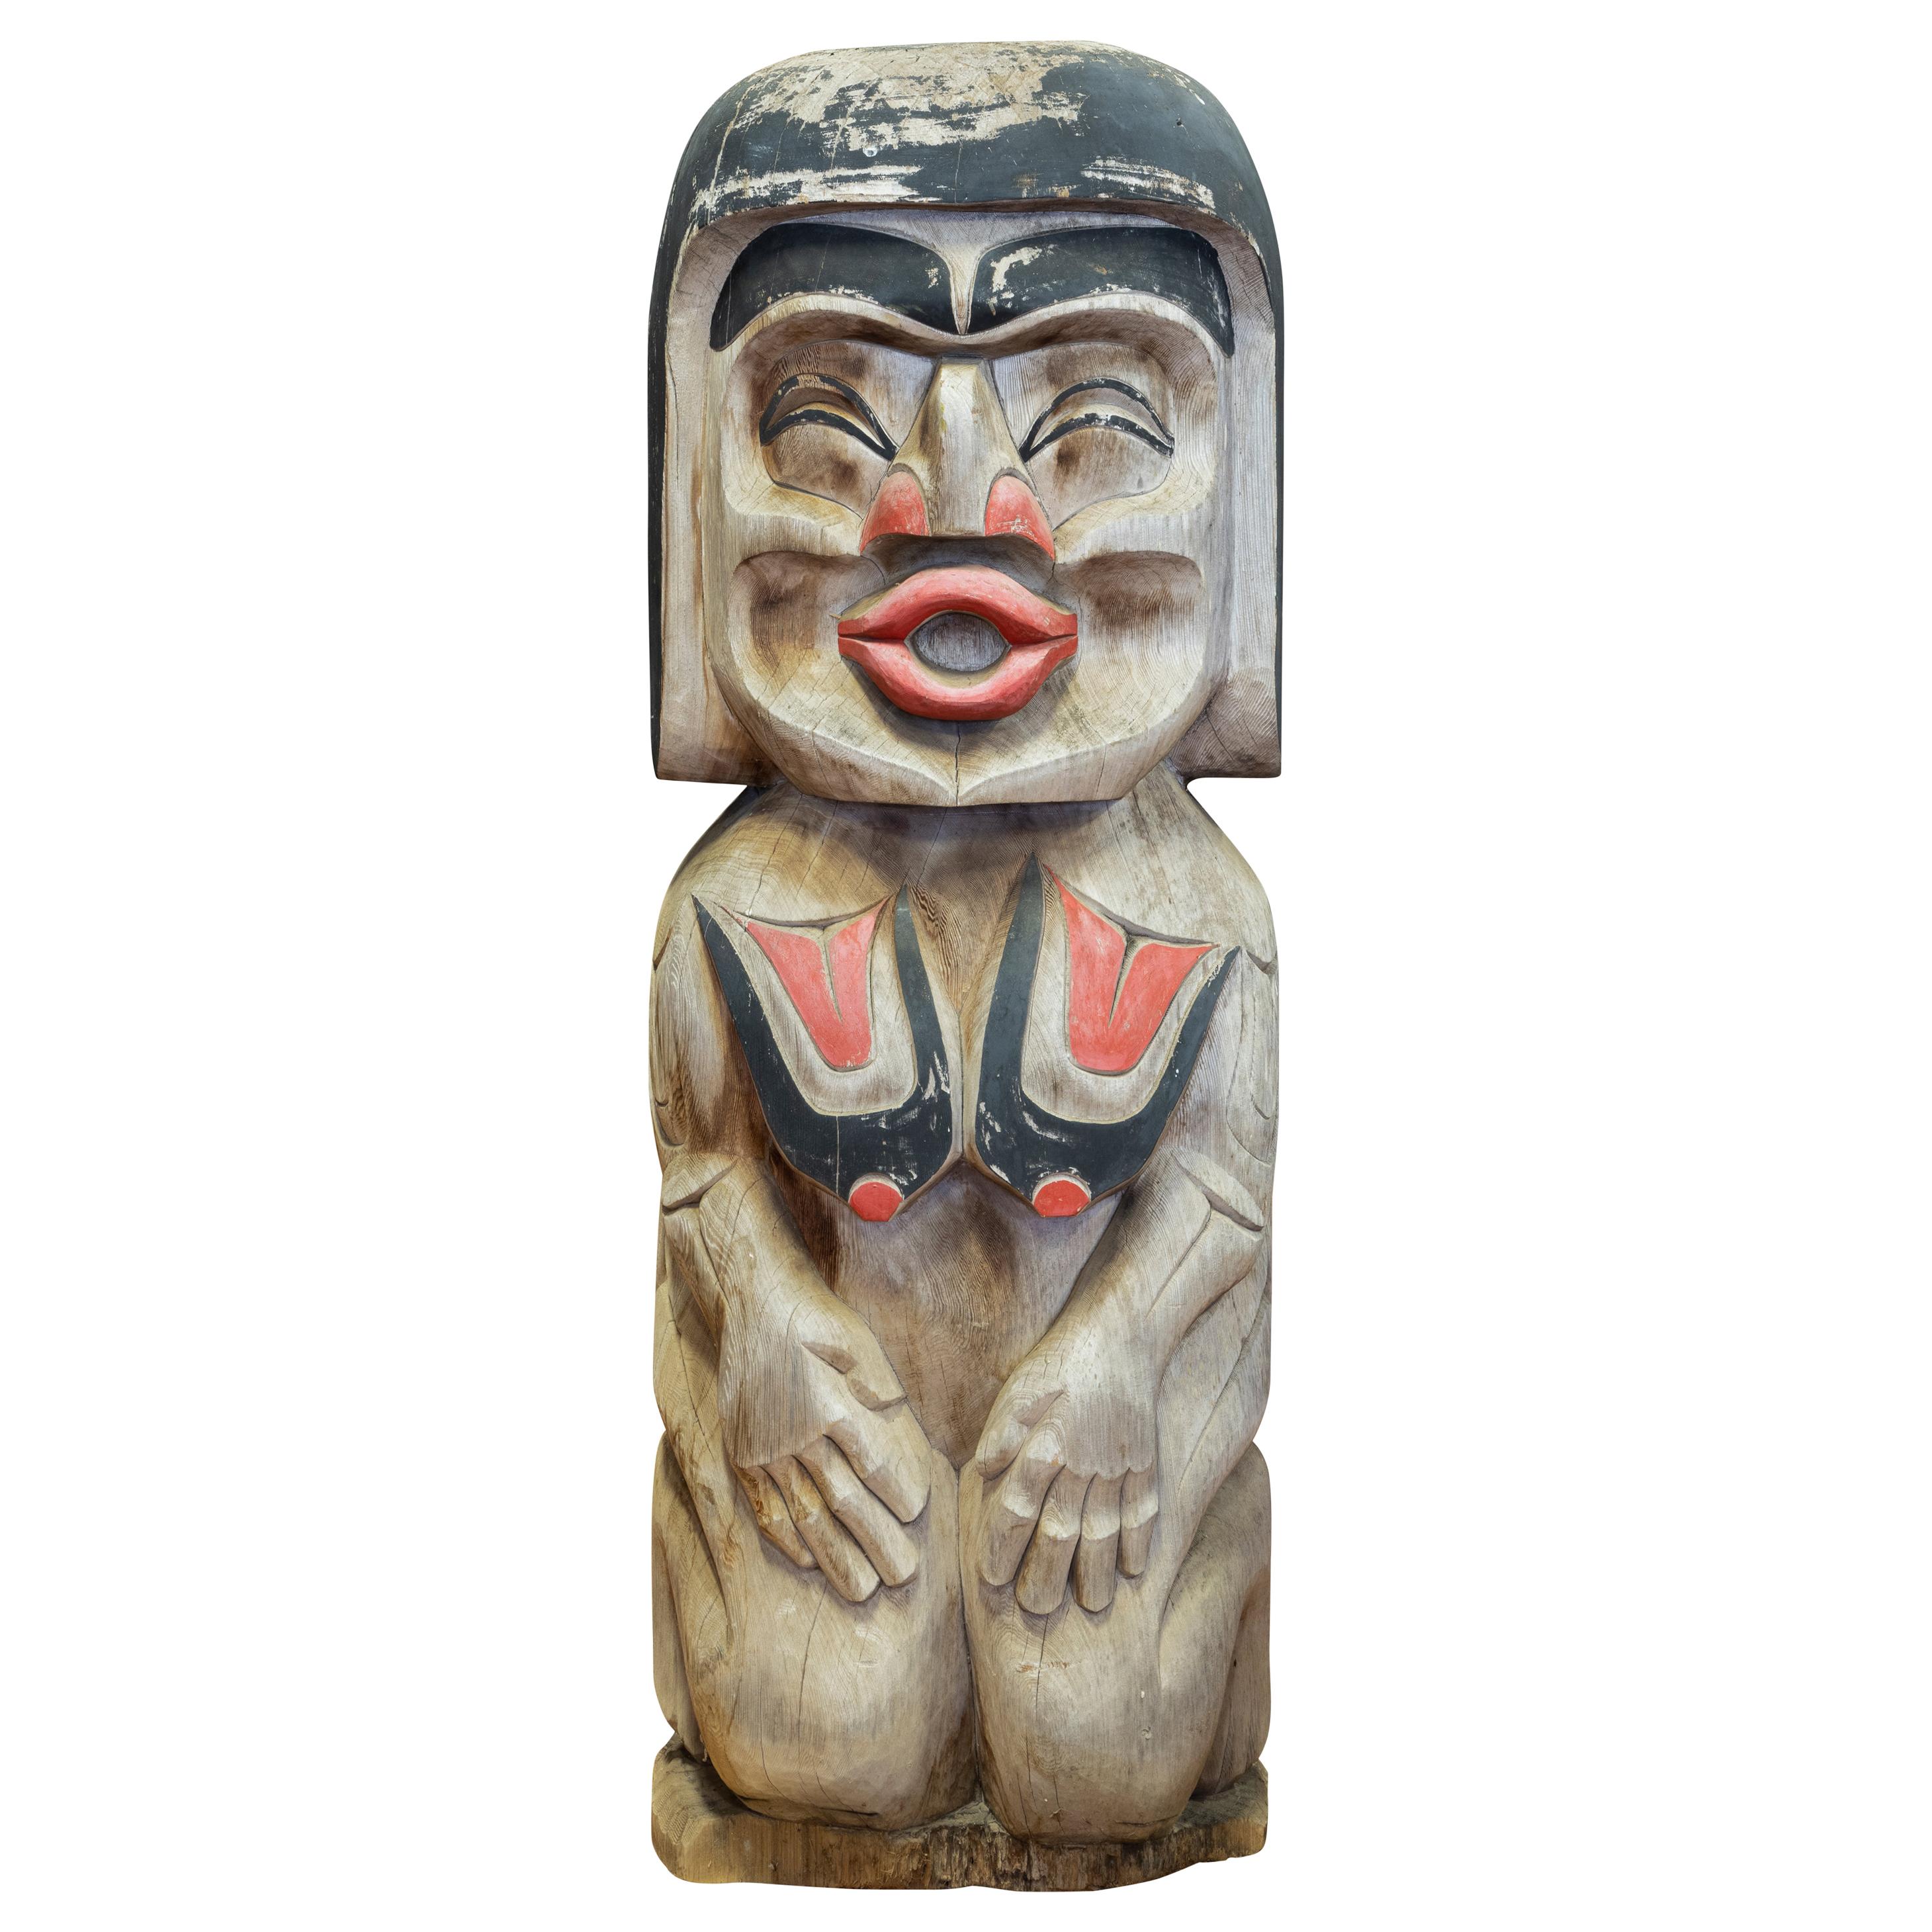 Tsonoqua/Dzunkukwa "Wild Woman of the Woods" Totem For Sale